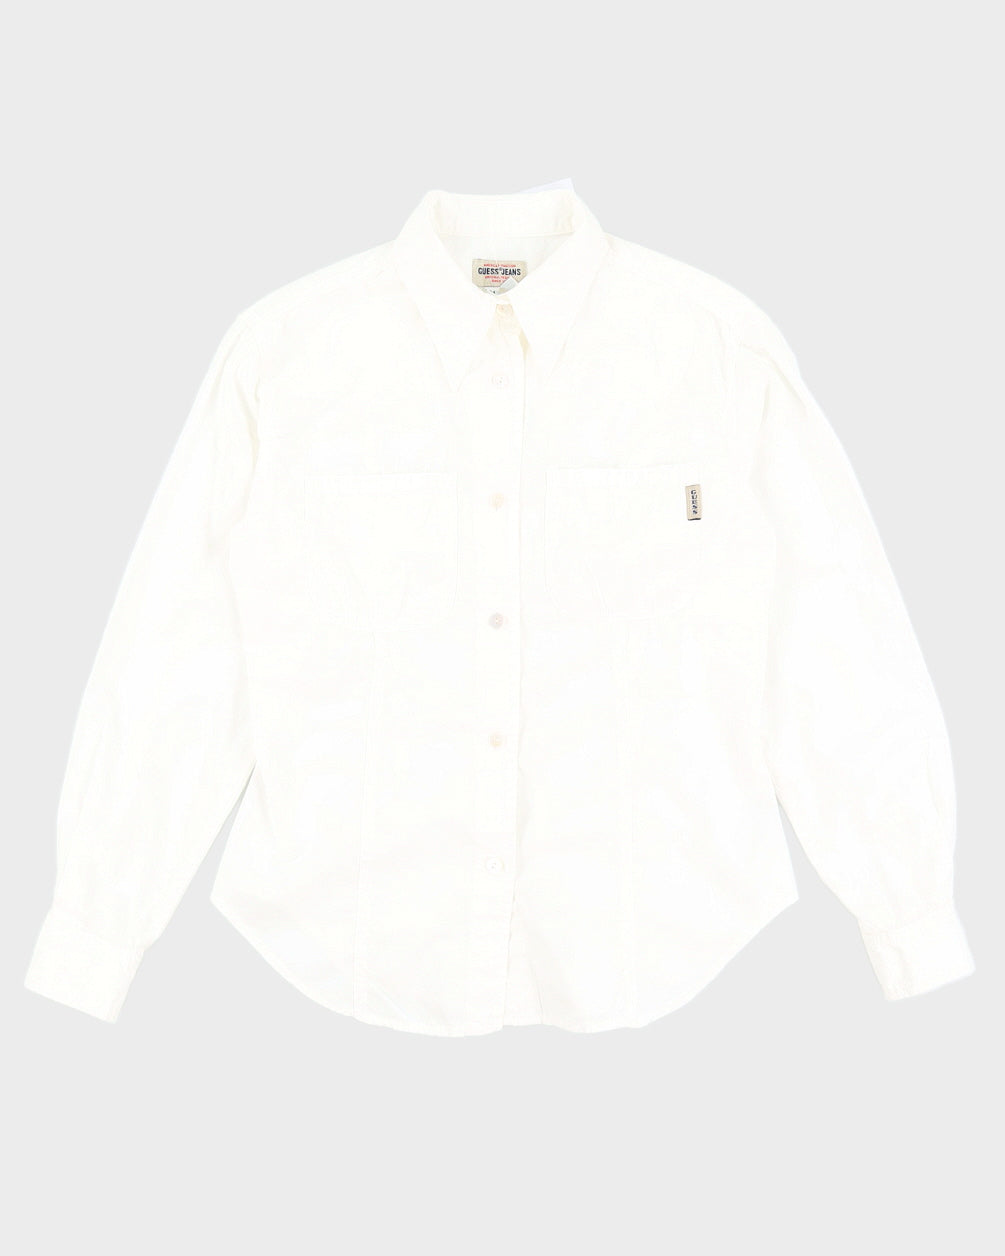 White Guess Shirt - M